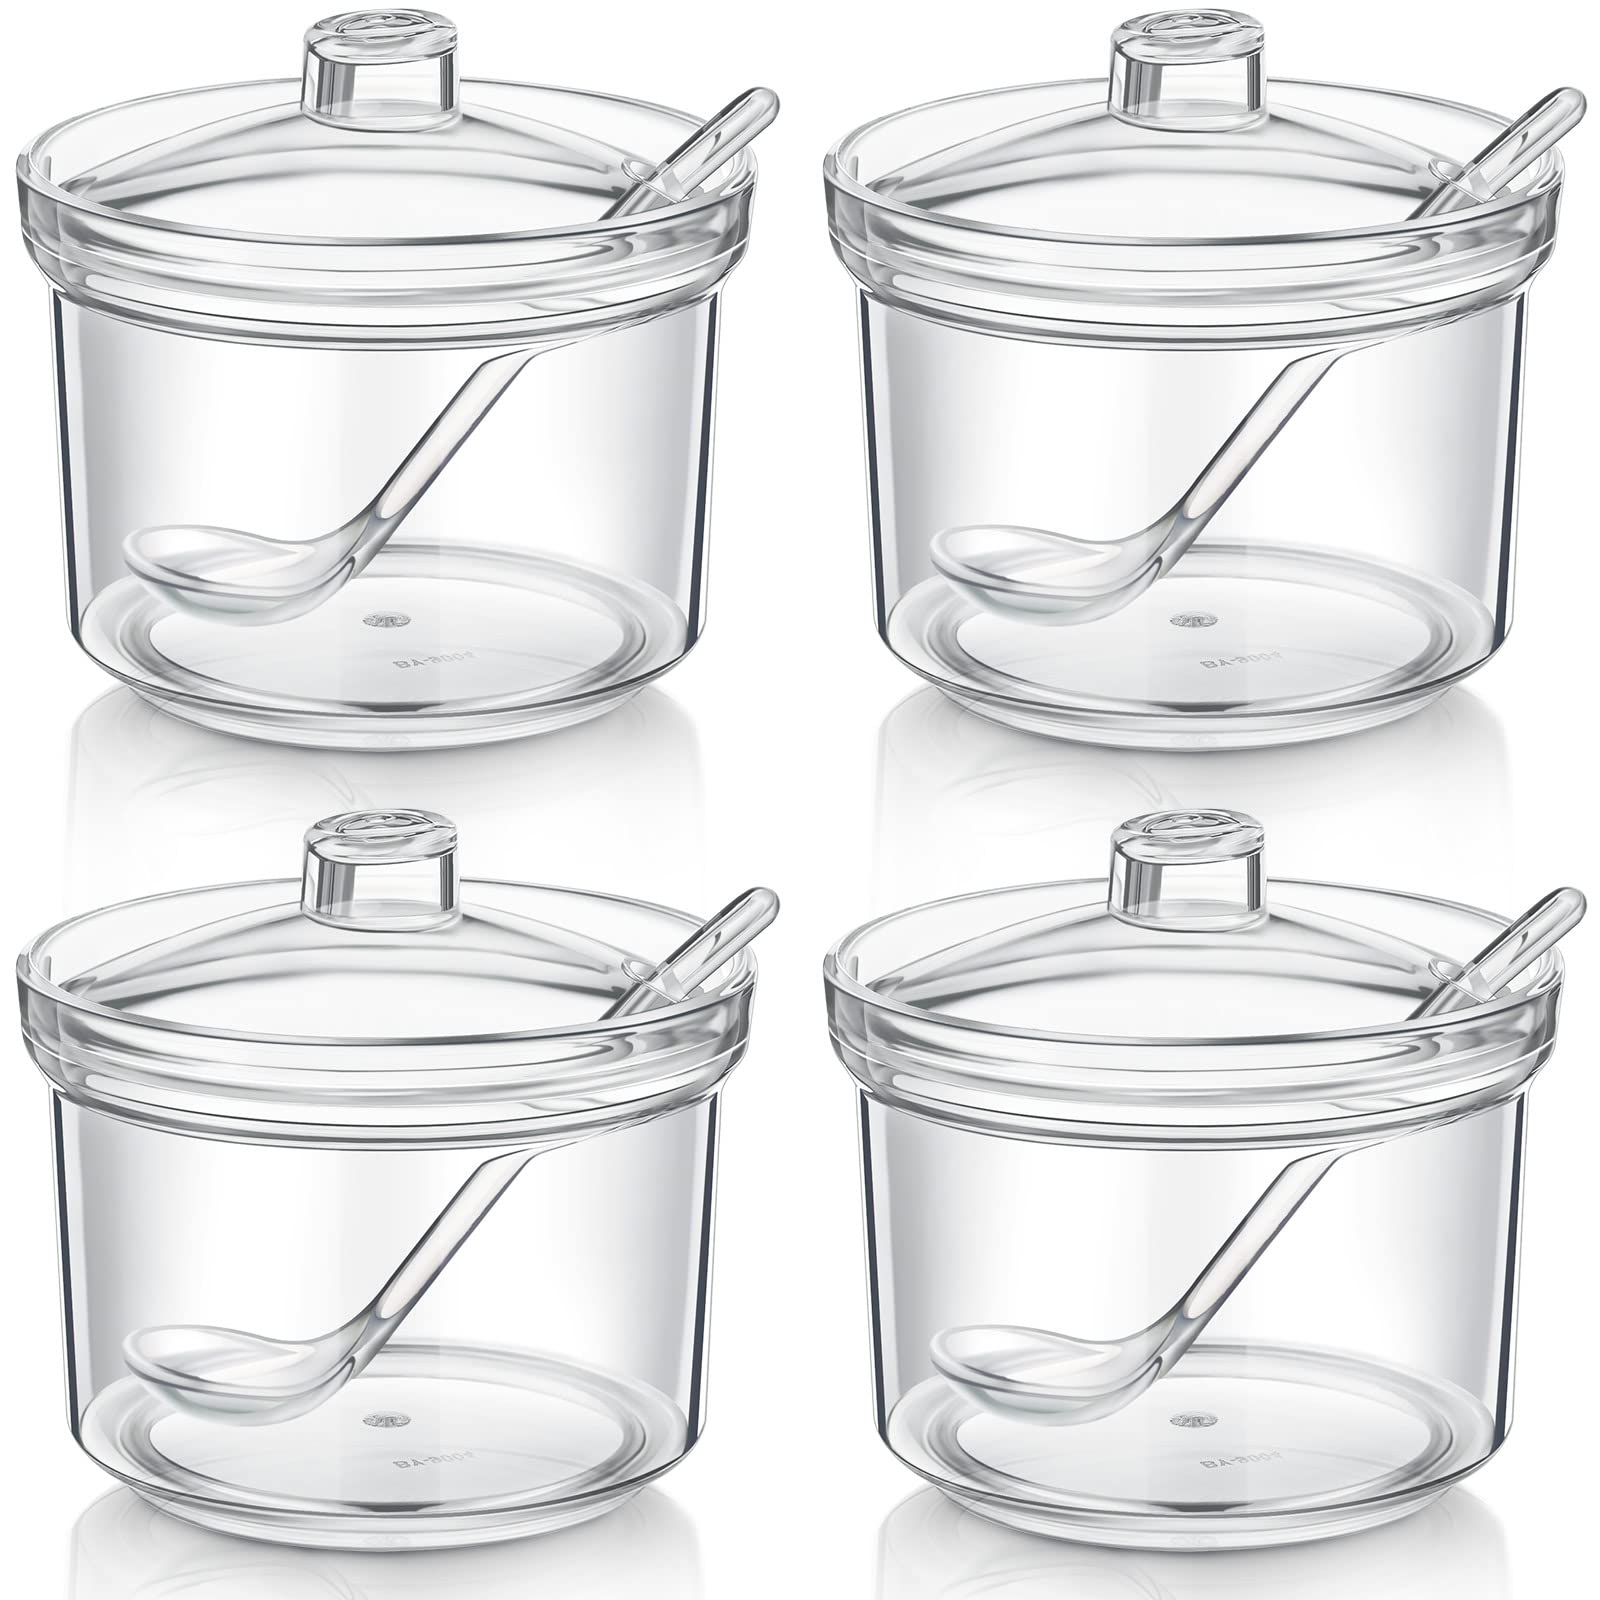 Patelai 4 Pieces Sugar Bowl Acrylic Clear Sugar Bowl with Lid and Salt Spoon Storage Sugar Jar with Airtight Lid for Sugar, Salt, Tea, Spices, Herbs, Condiments (13 oz)